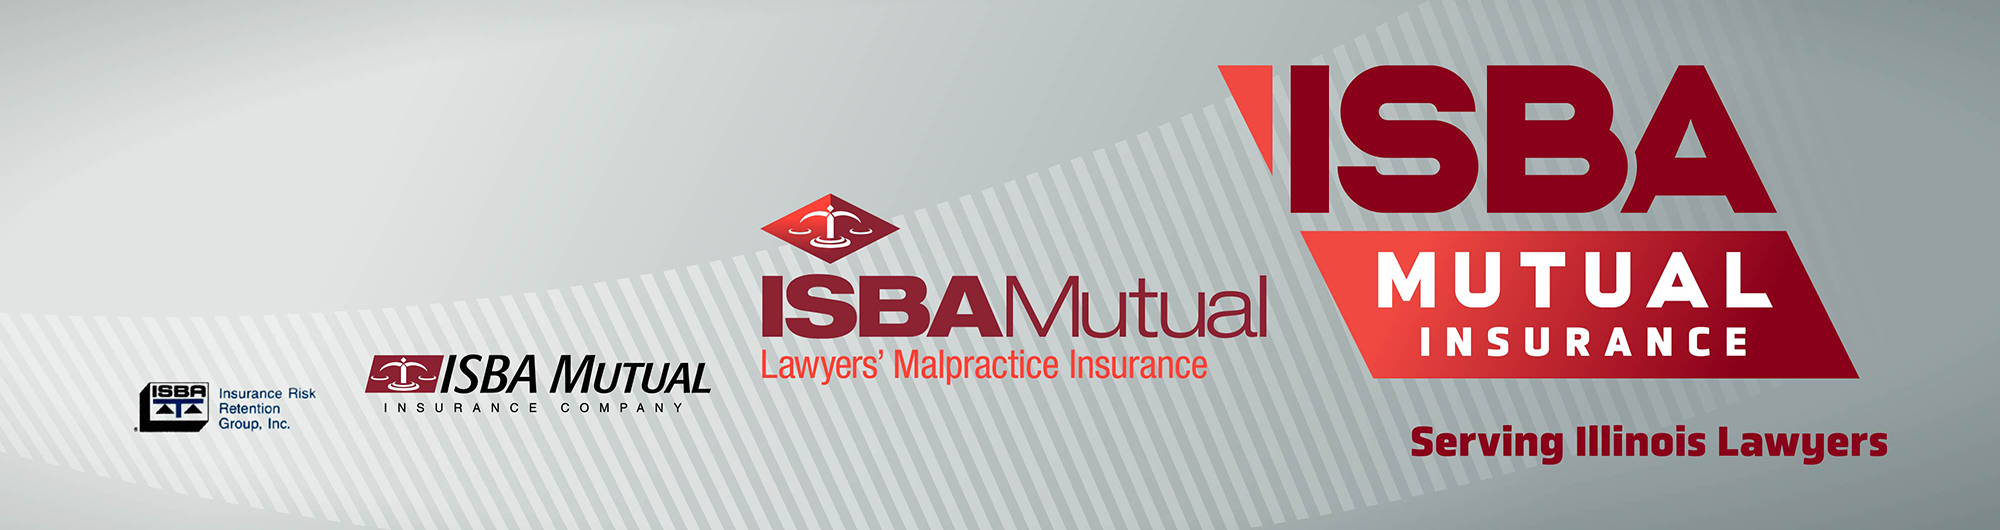 ISBA Mutual Insurance logo